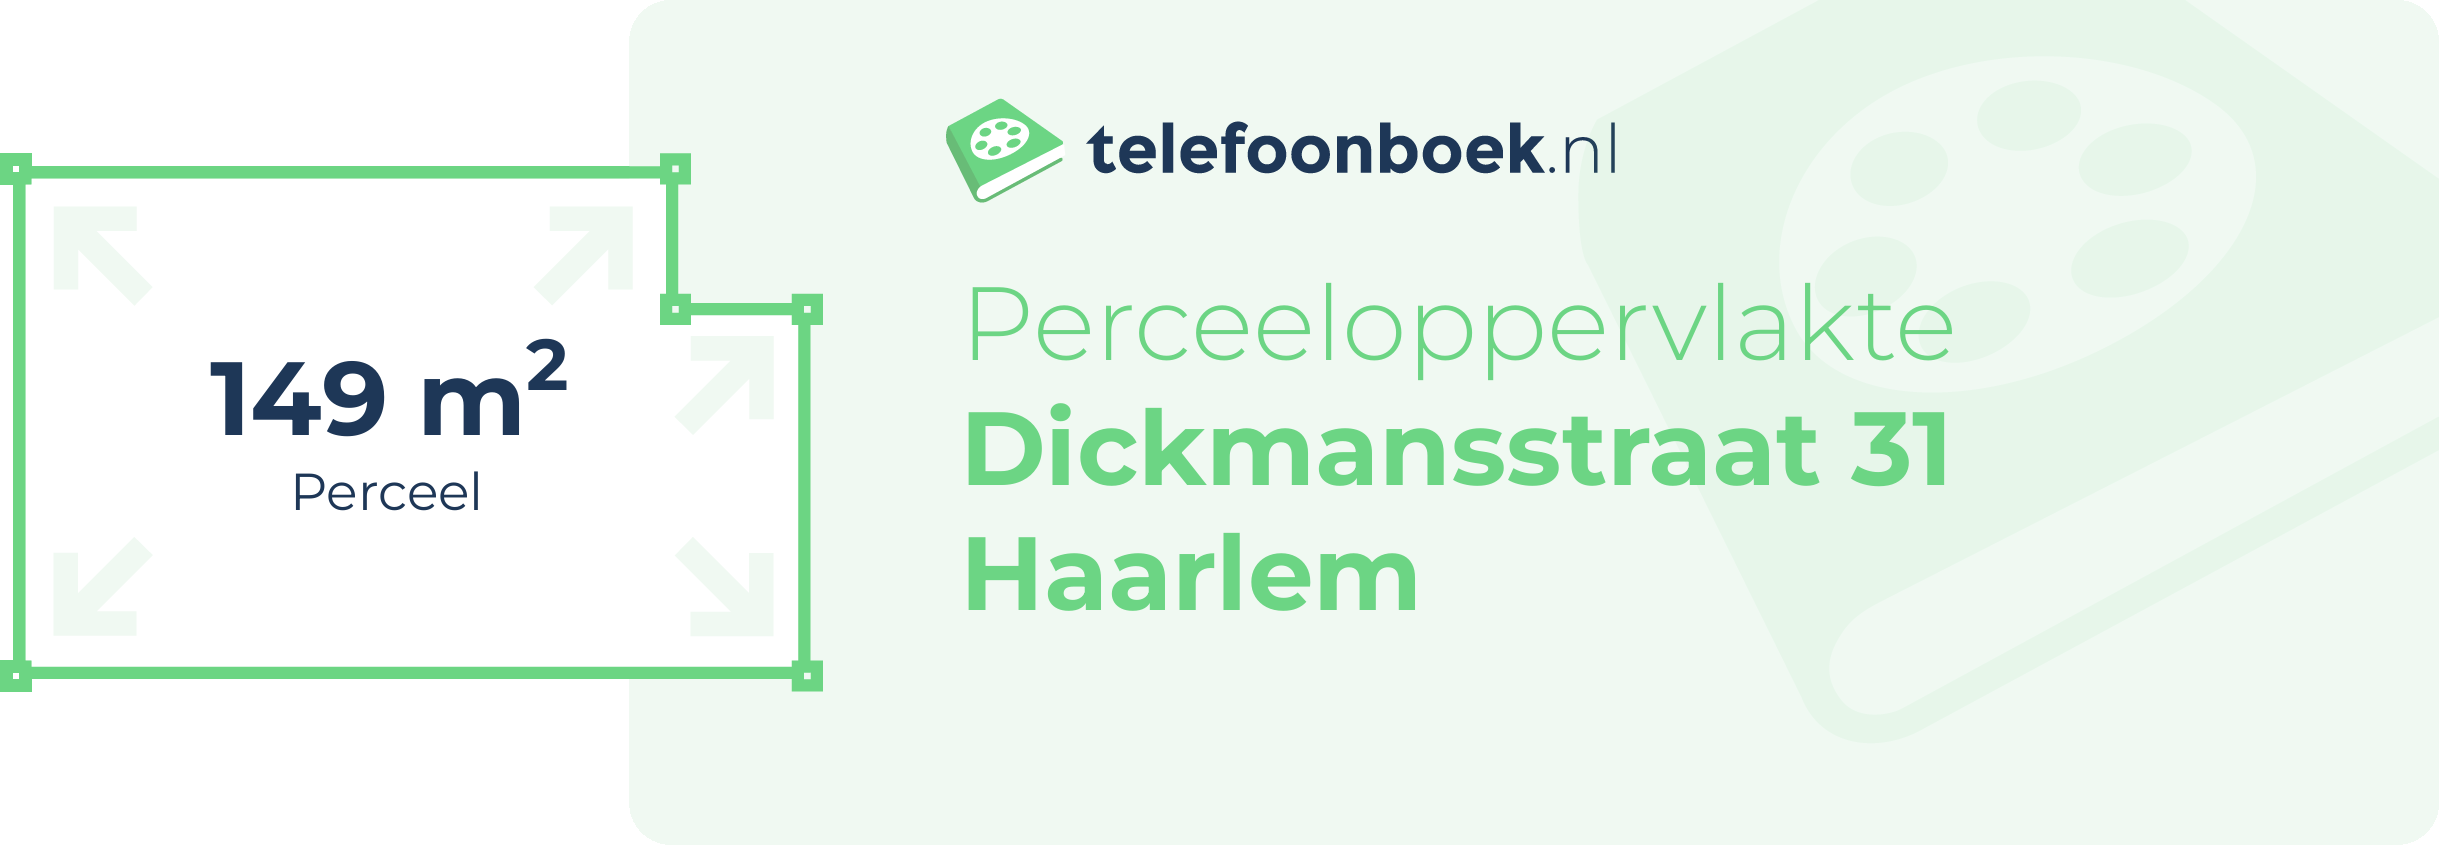 Perceeloppervlakte Dickmansstraat 31 Haarlem